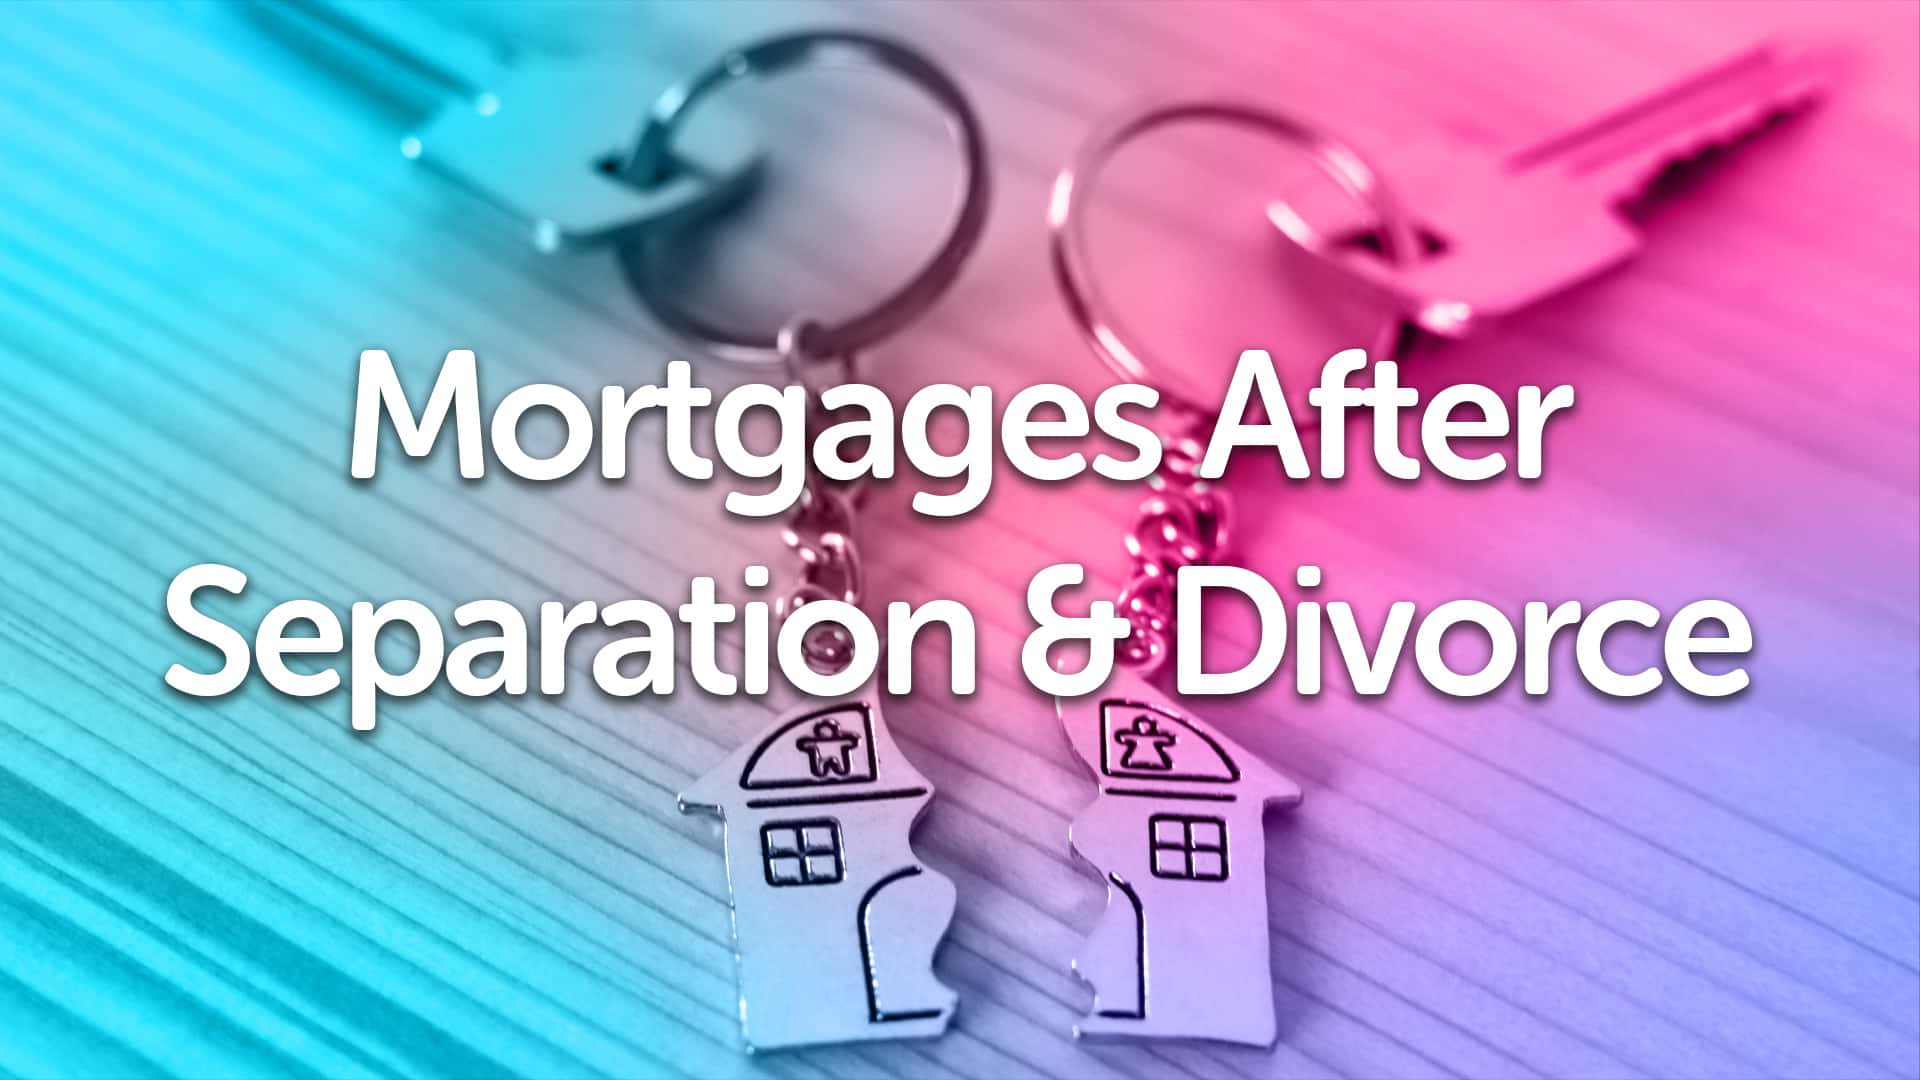 Divorce & Separation Mortgage Advice in Cambridge